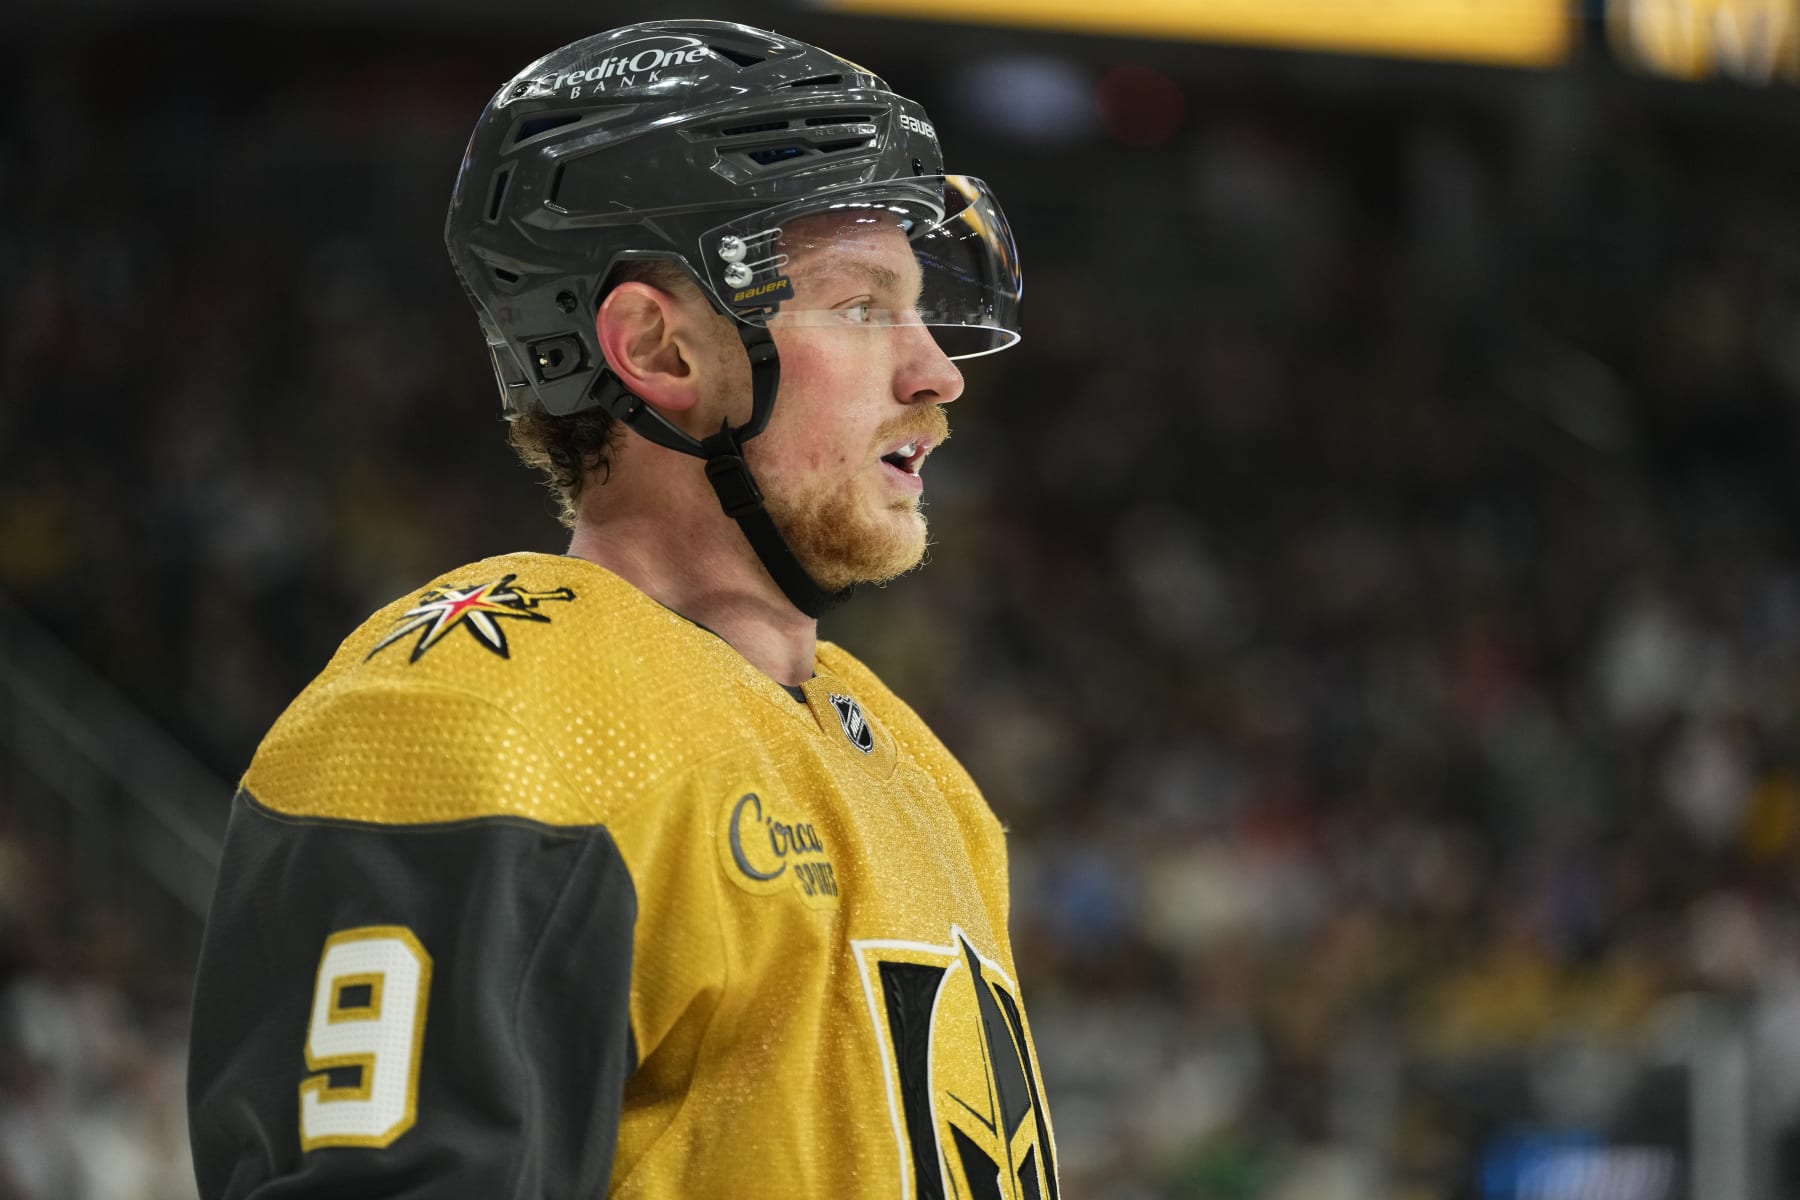 Matthew Tkachuk Fined After Physical Bruins-Panthers Game - Bleacher Nation